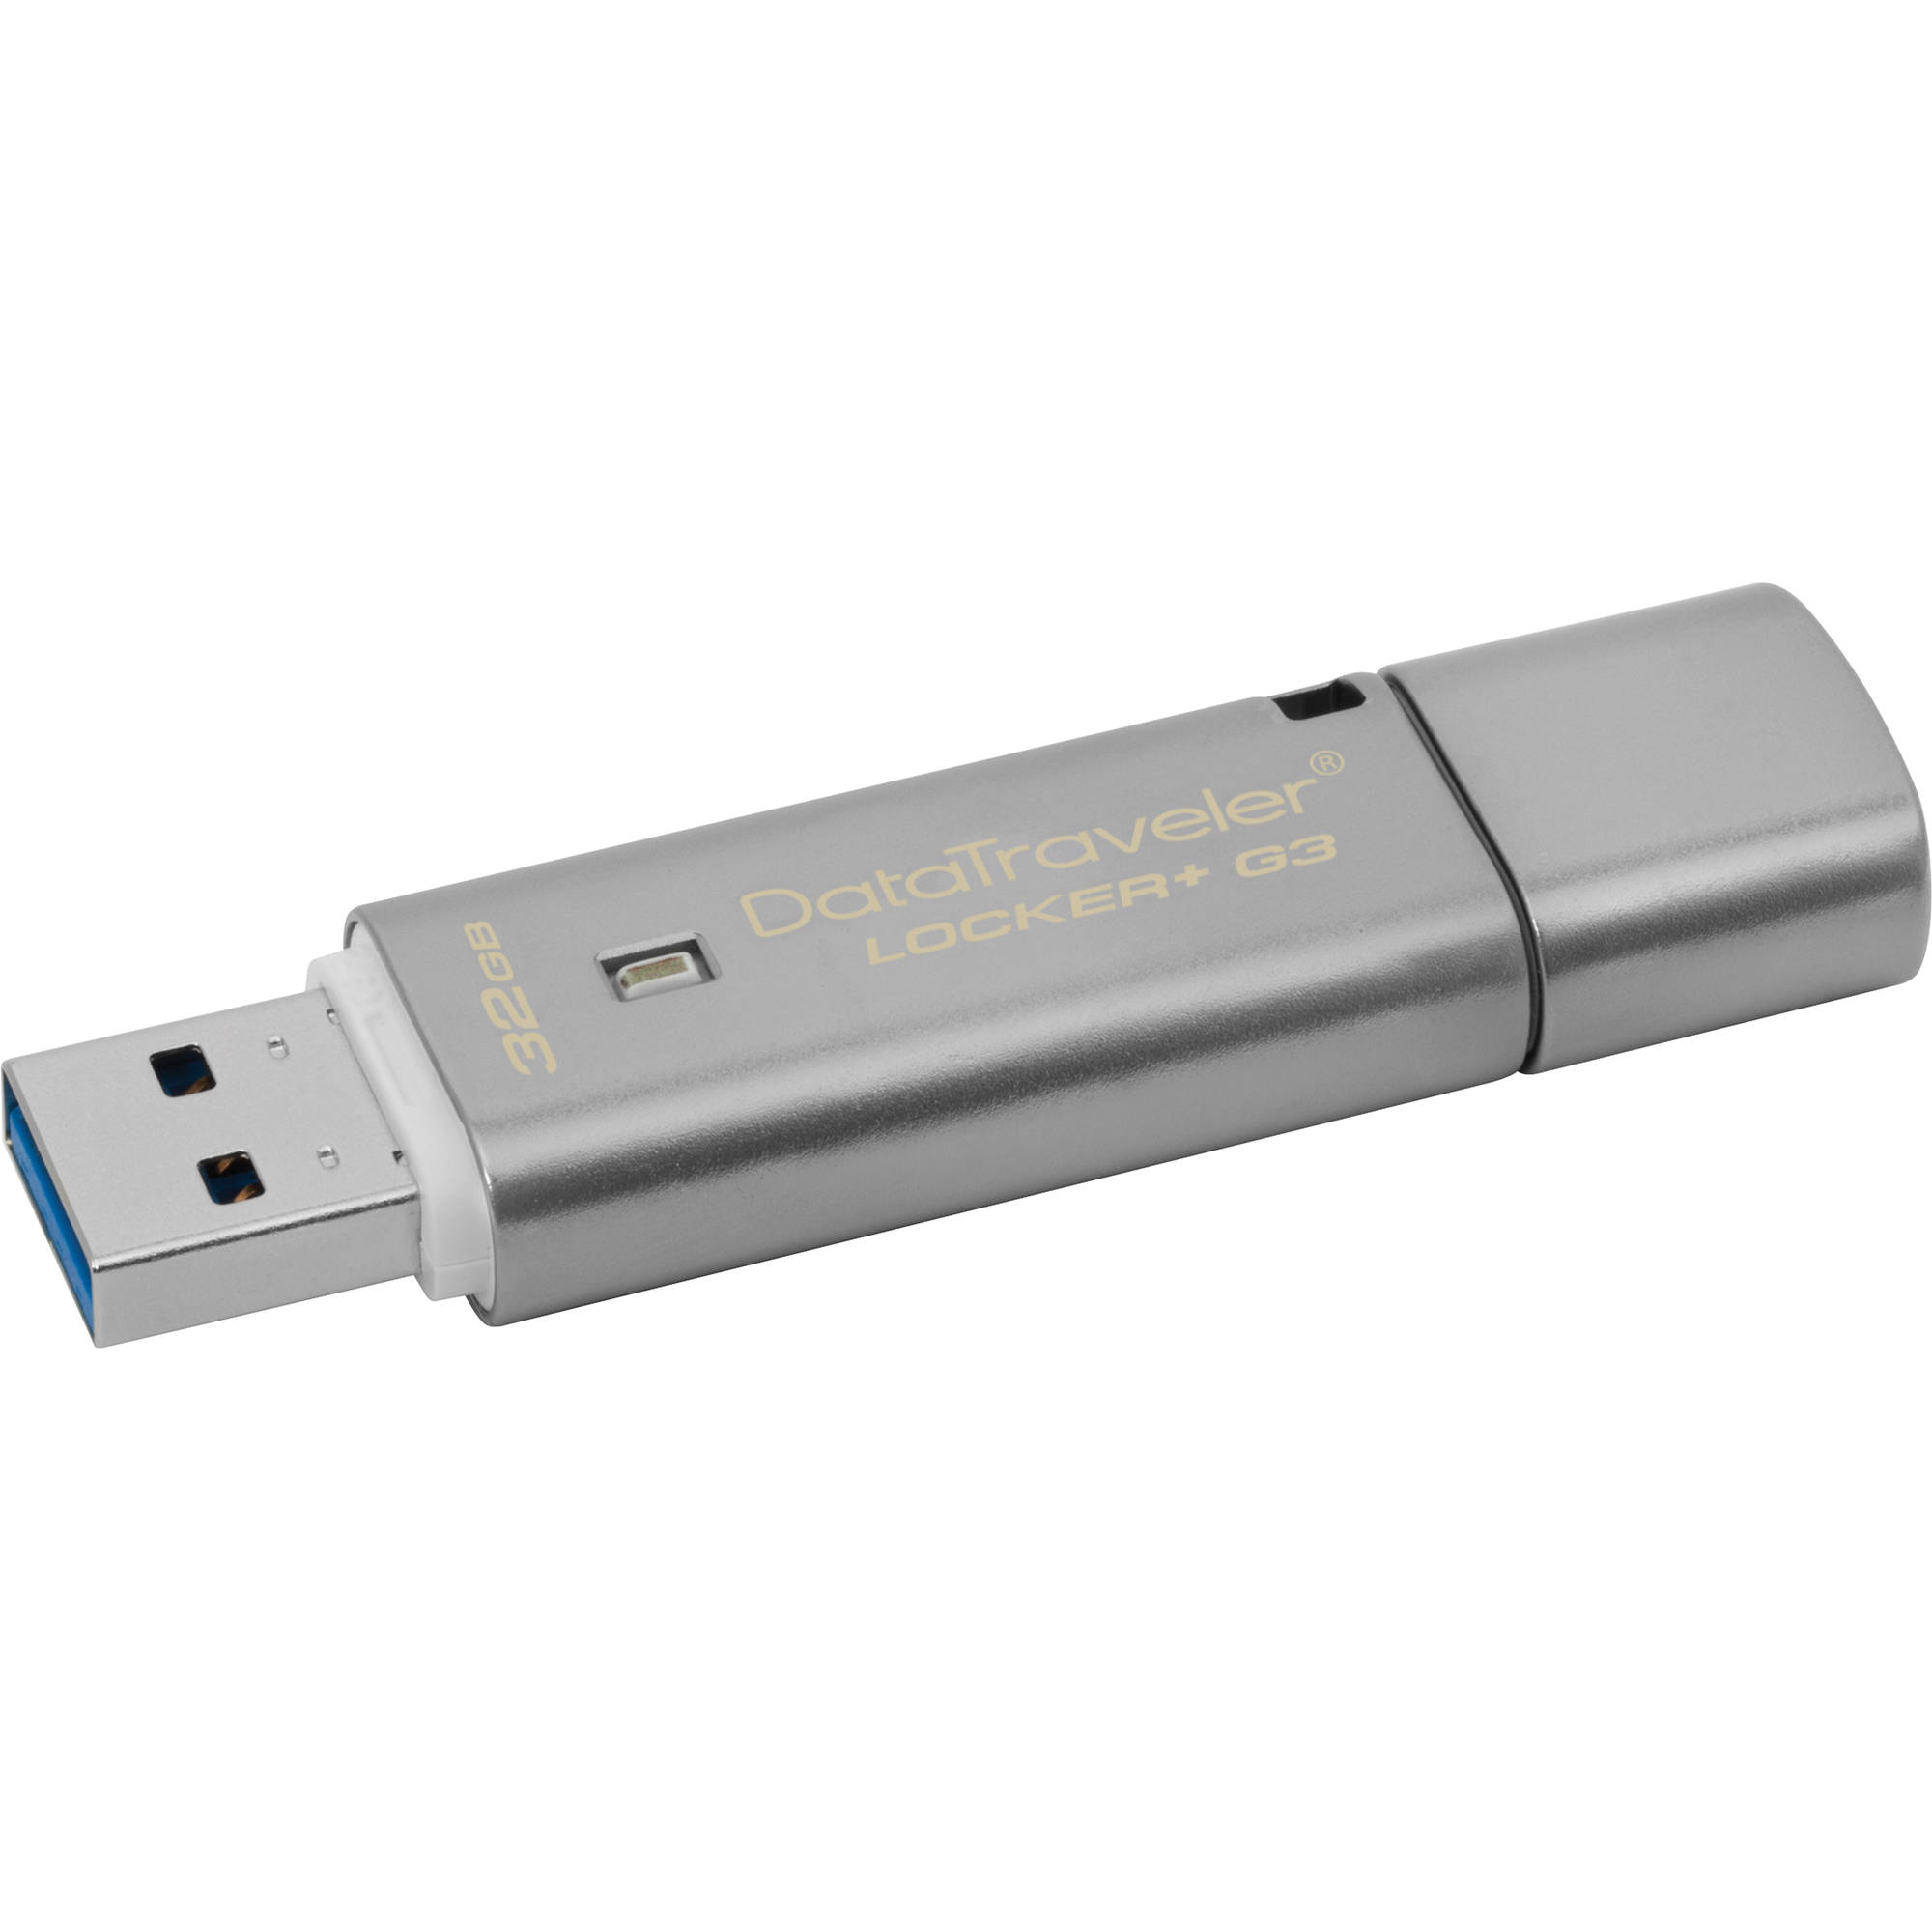 Original Kingston Data Traveler Locker+ G3 32GB Silver USB 3.0 Flash Drive (DTLPG3/32GB)